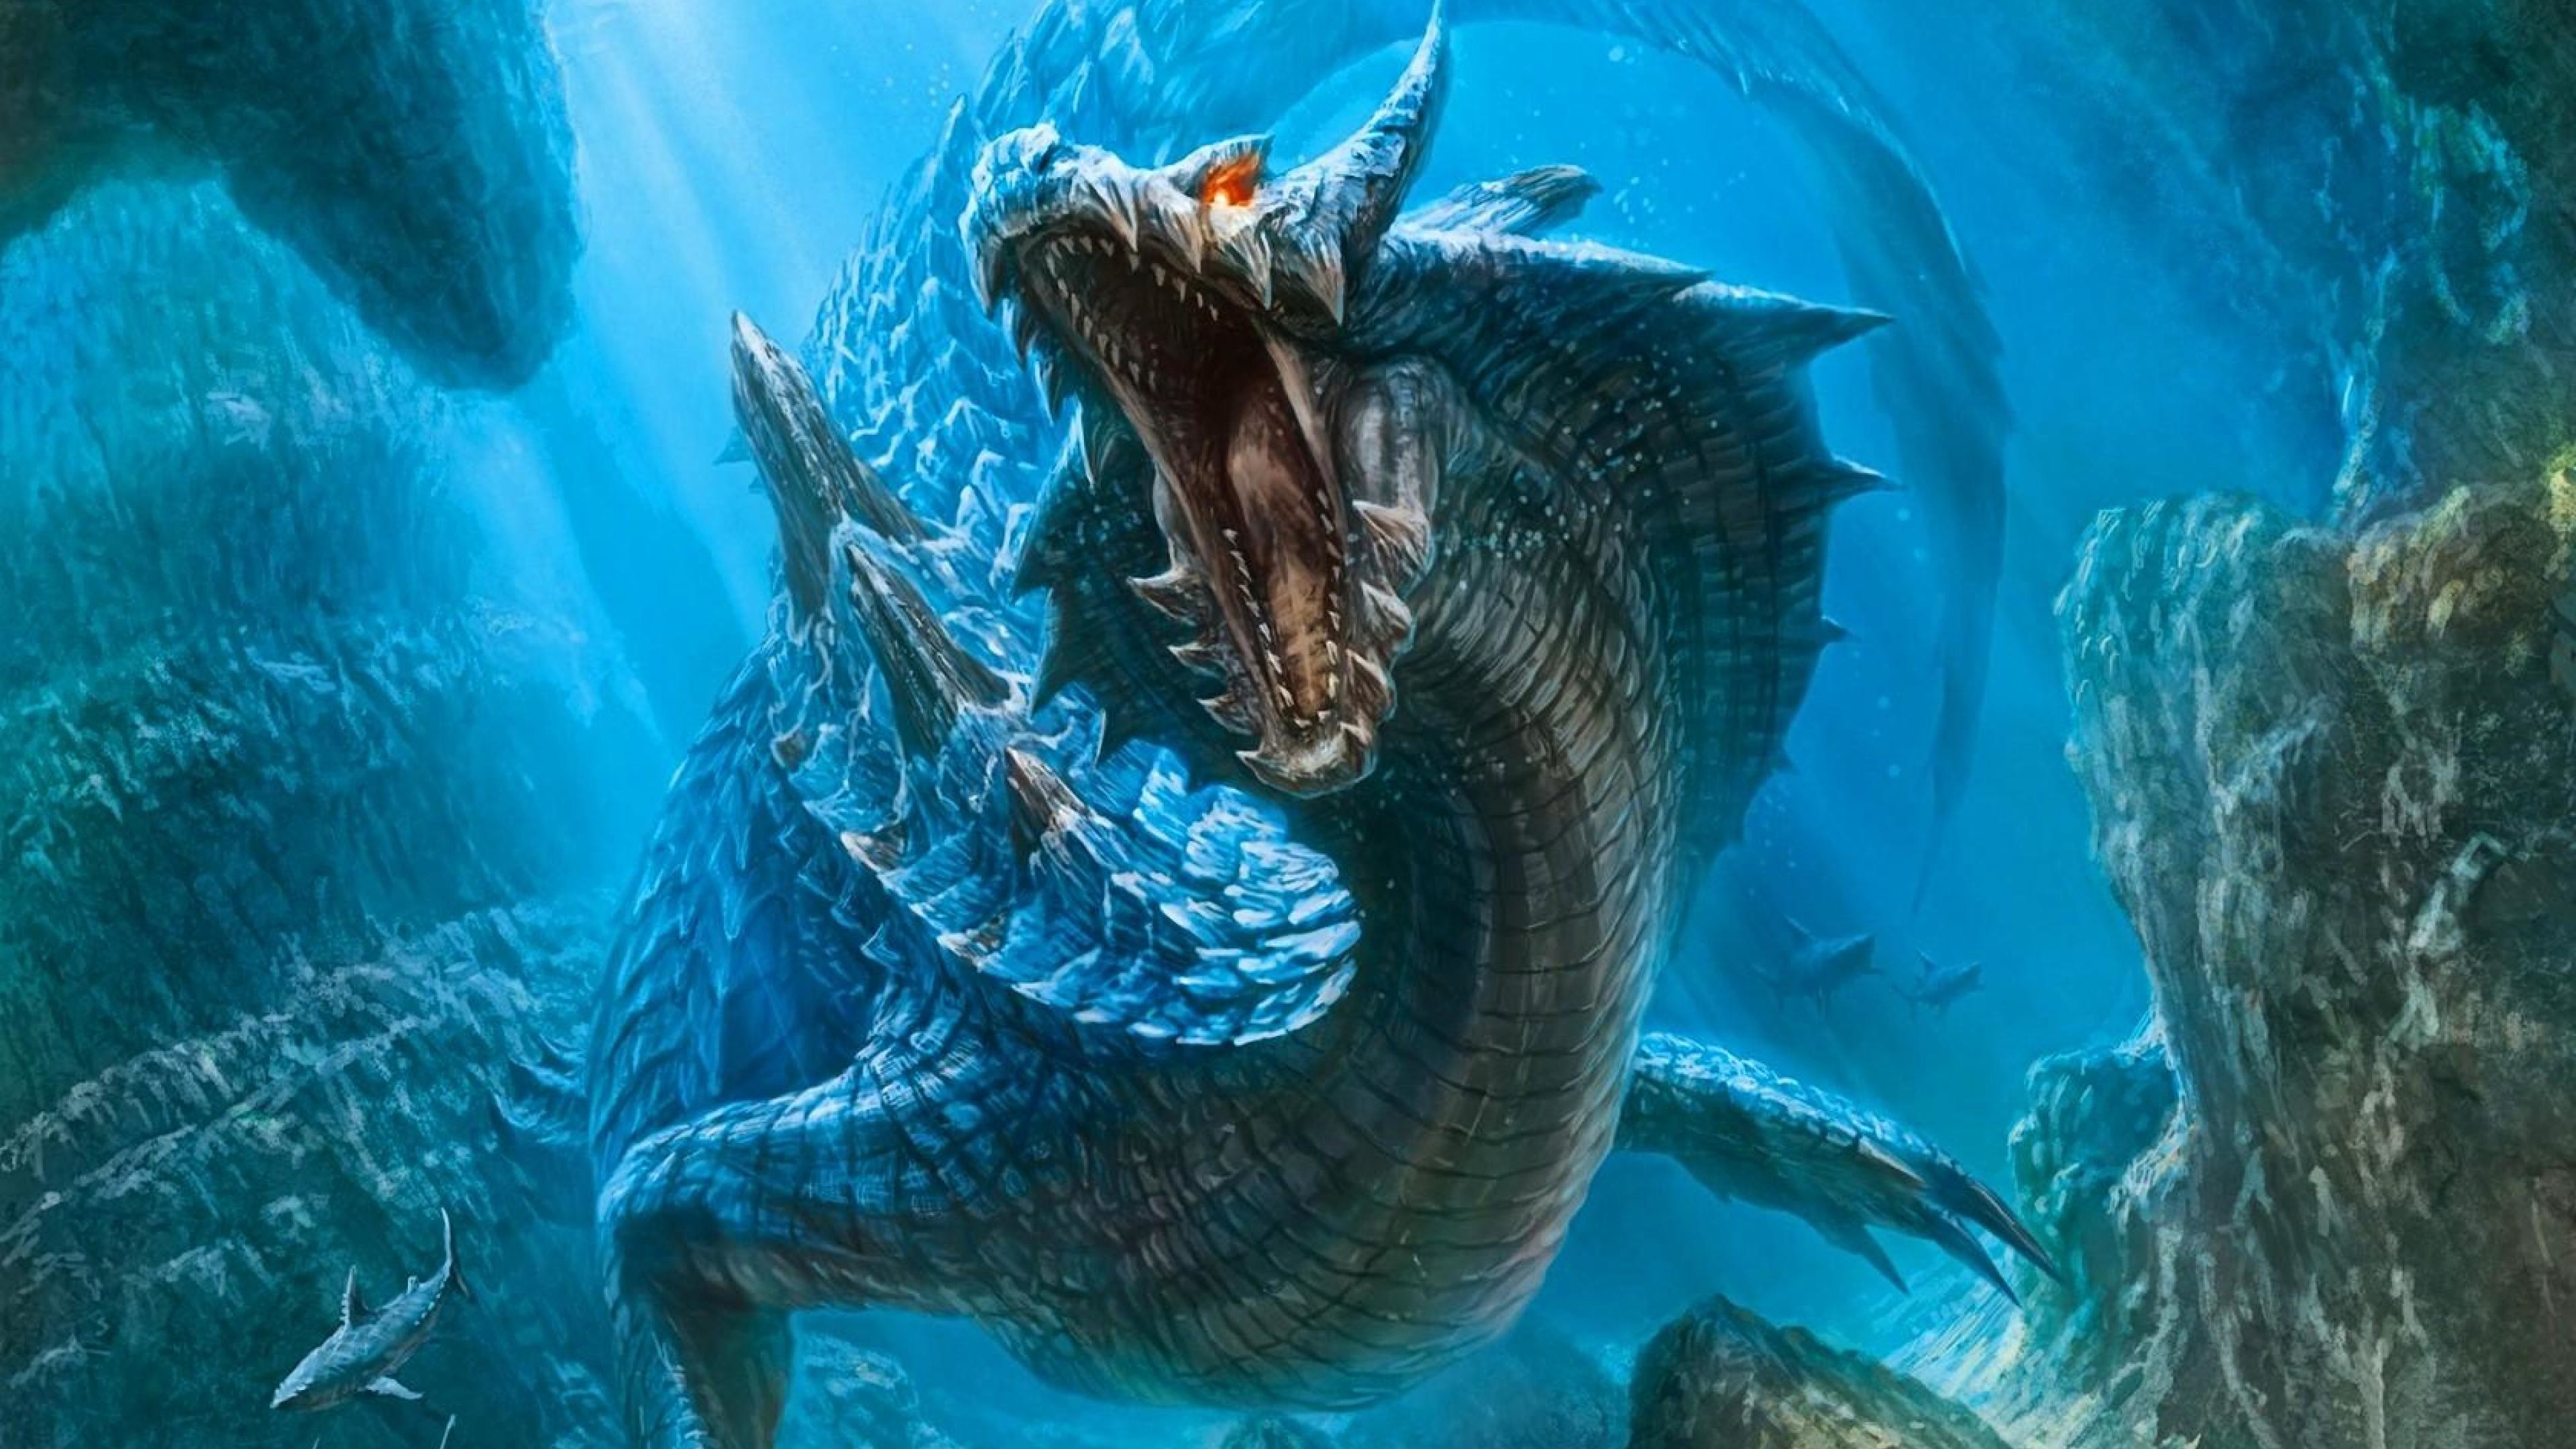 monster hunter wallpaper,dragon,cg artwork,fictional character,mythical creature,marine biology